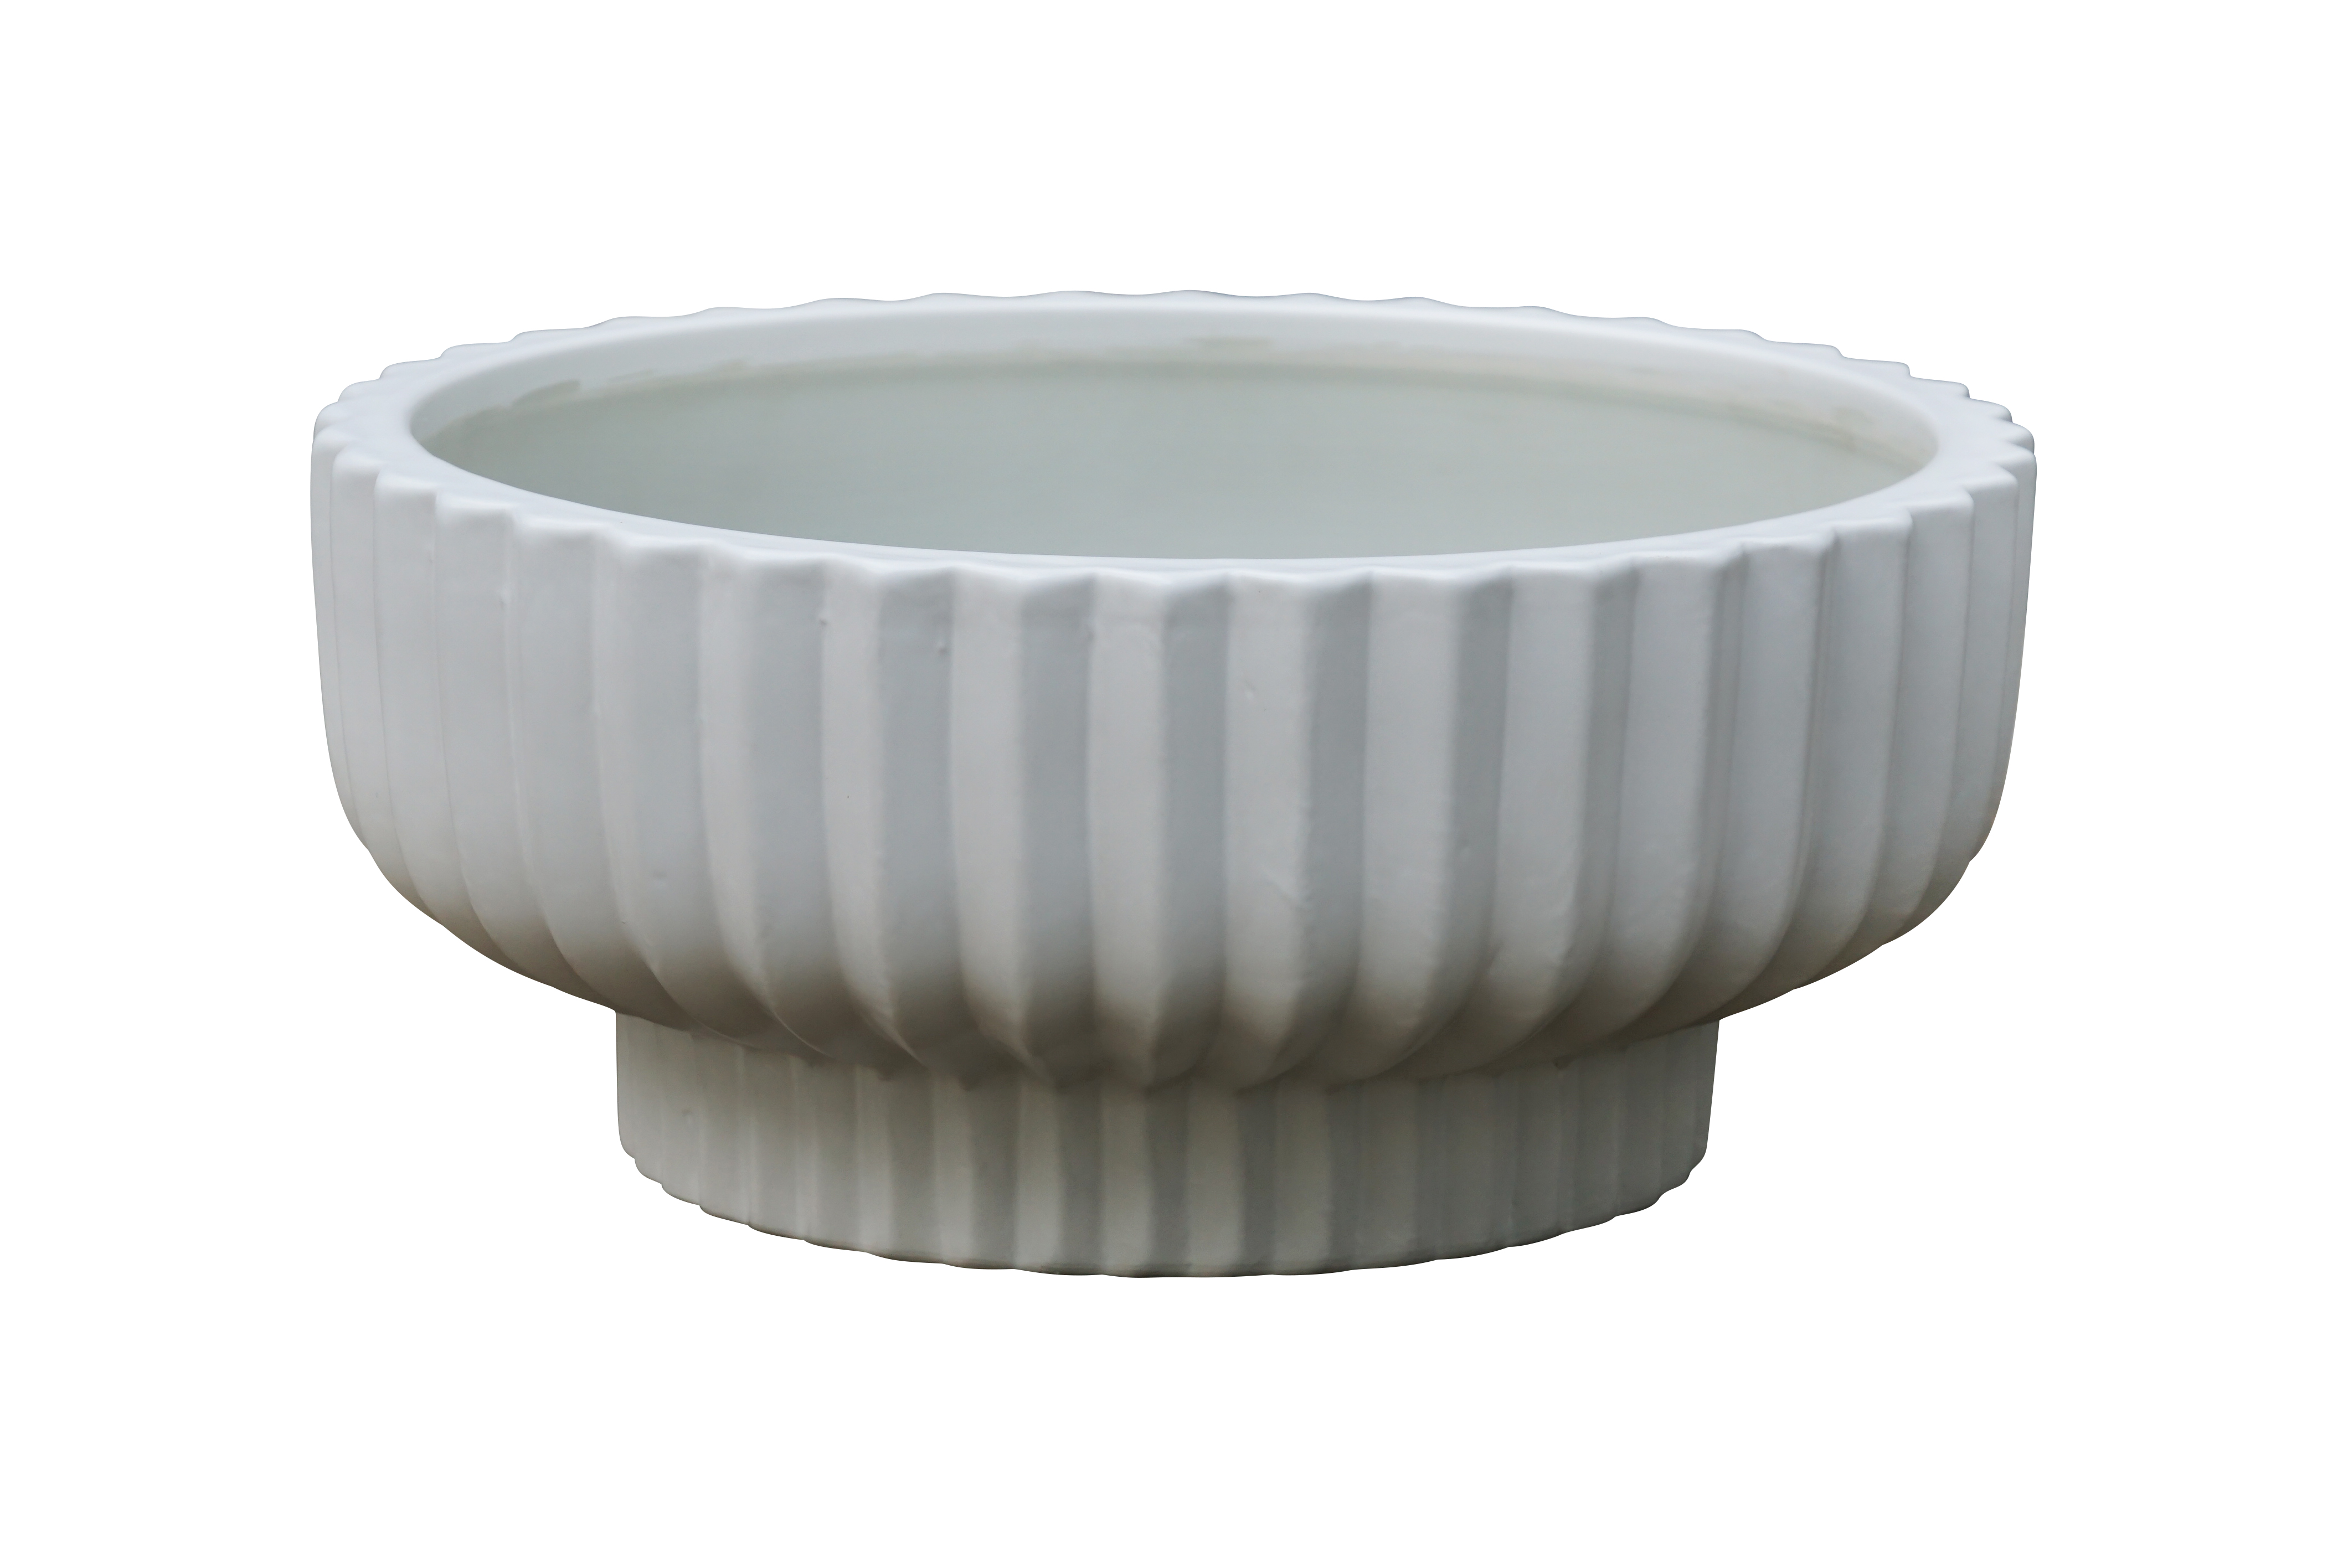 Better Homes & Gardens Pottery 12" Fischer Round Ceramic Planter, White - image 2 of 8